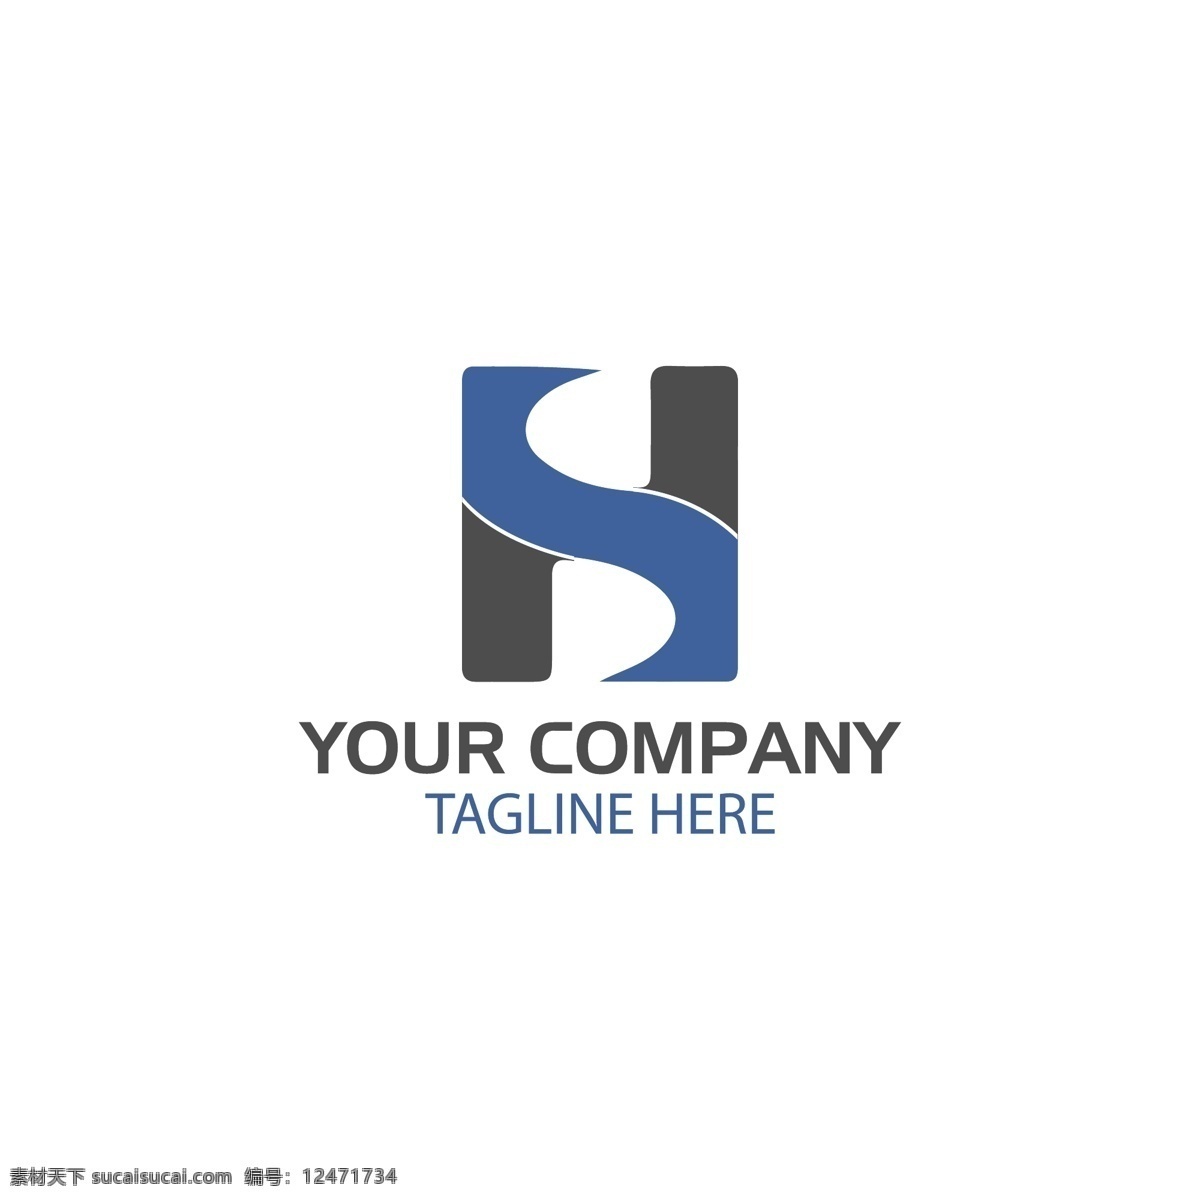 h 字母 造型 logo 工业 科技 标志 创意 广告 化妆品 互联网 科技logo 领域 多用途 标识 公司 简约 企业标识 企业logo